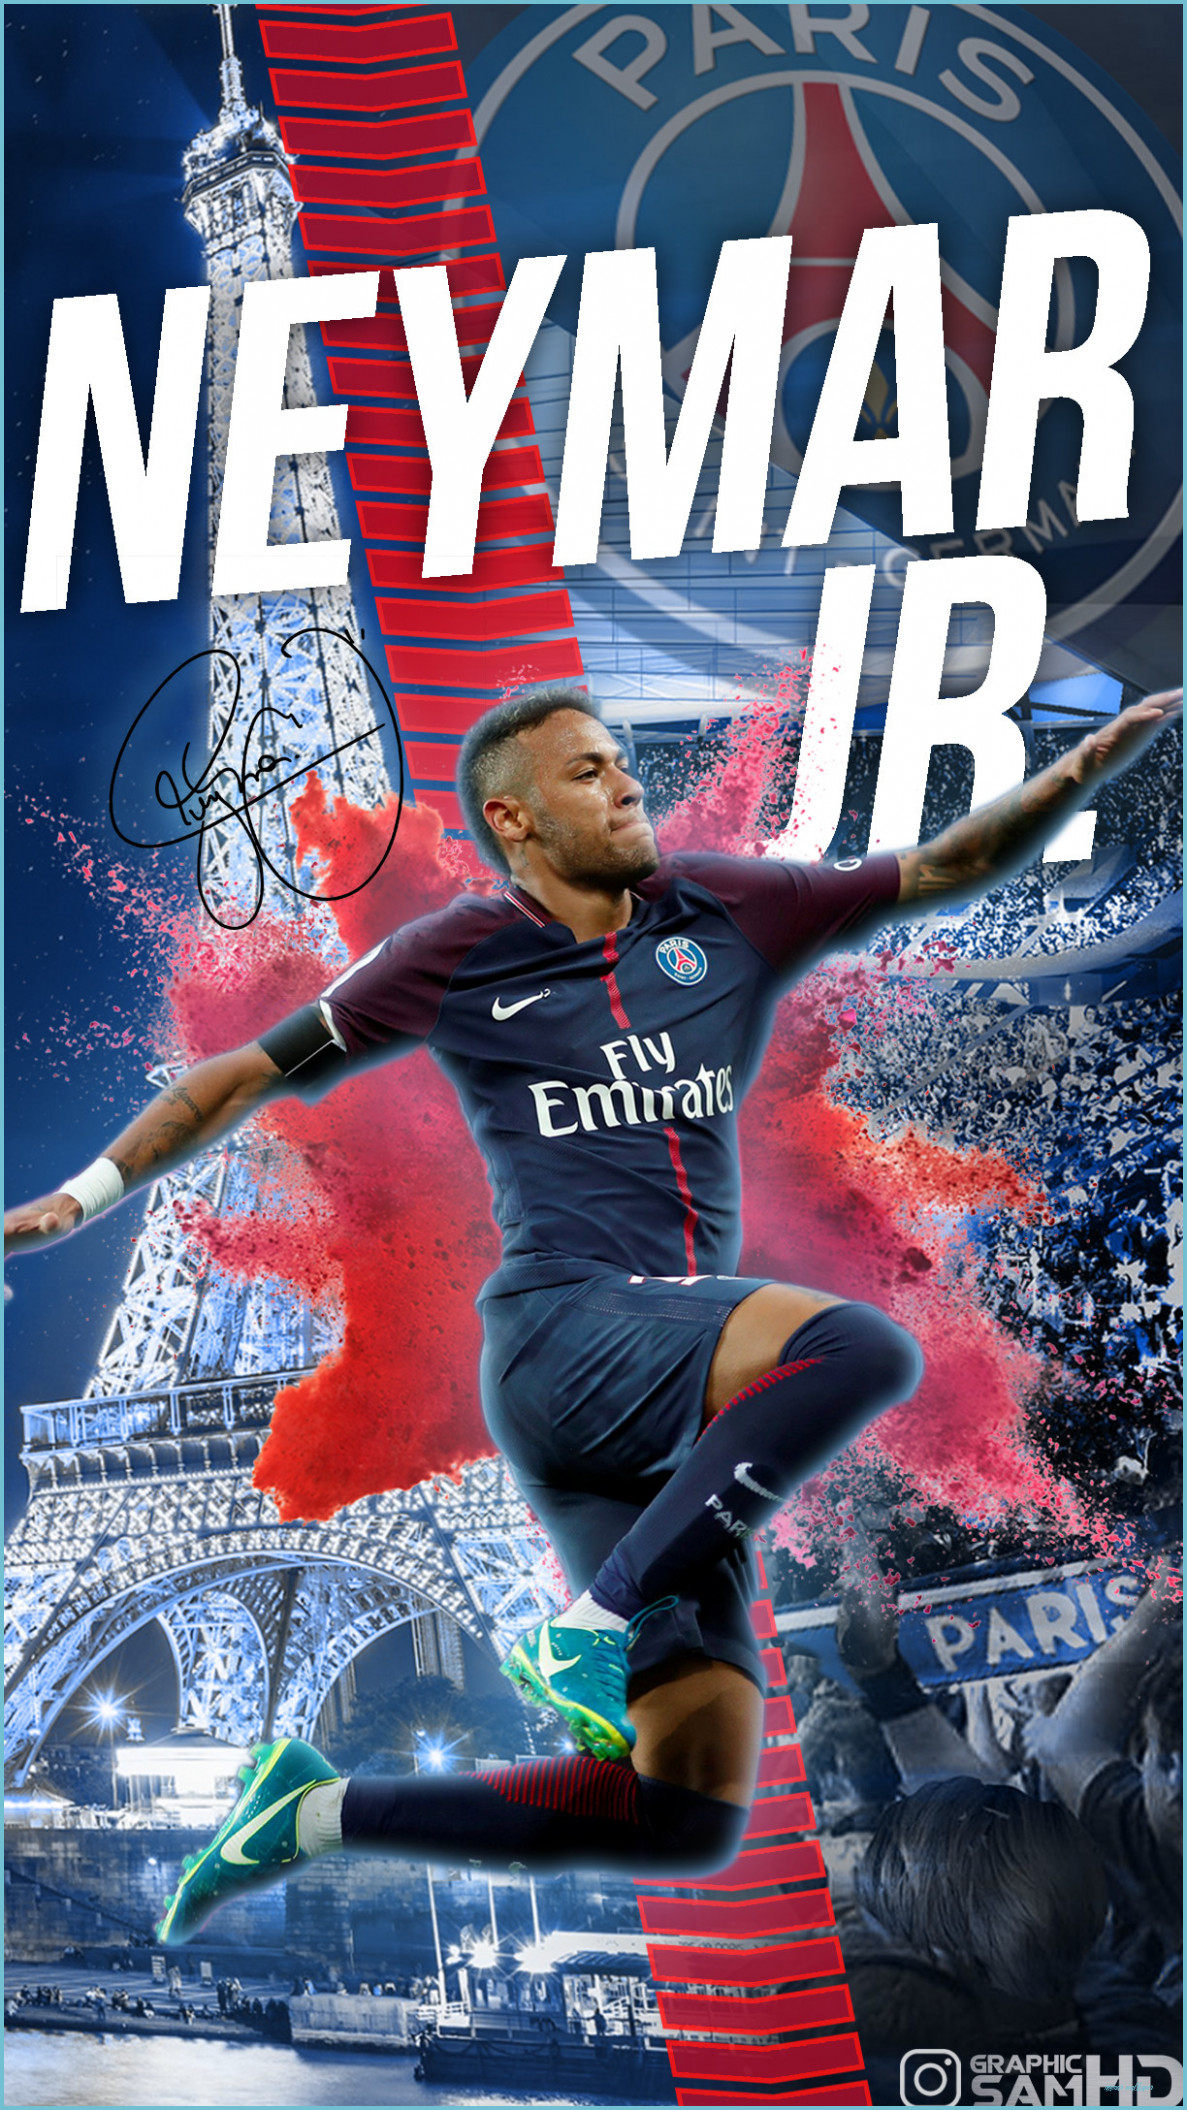 Neymar Jr 11 Wallpaper (Picture)